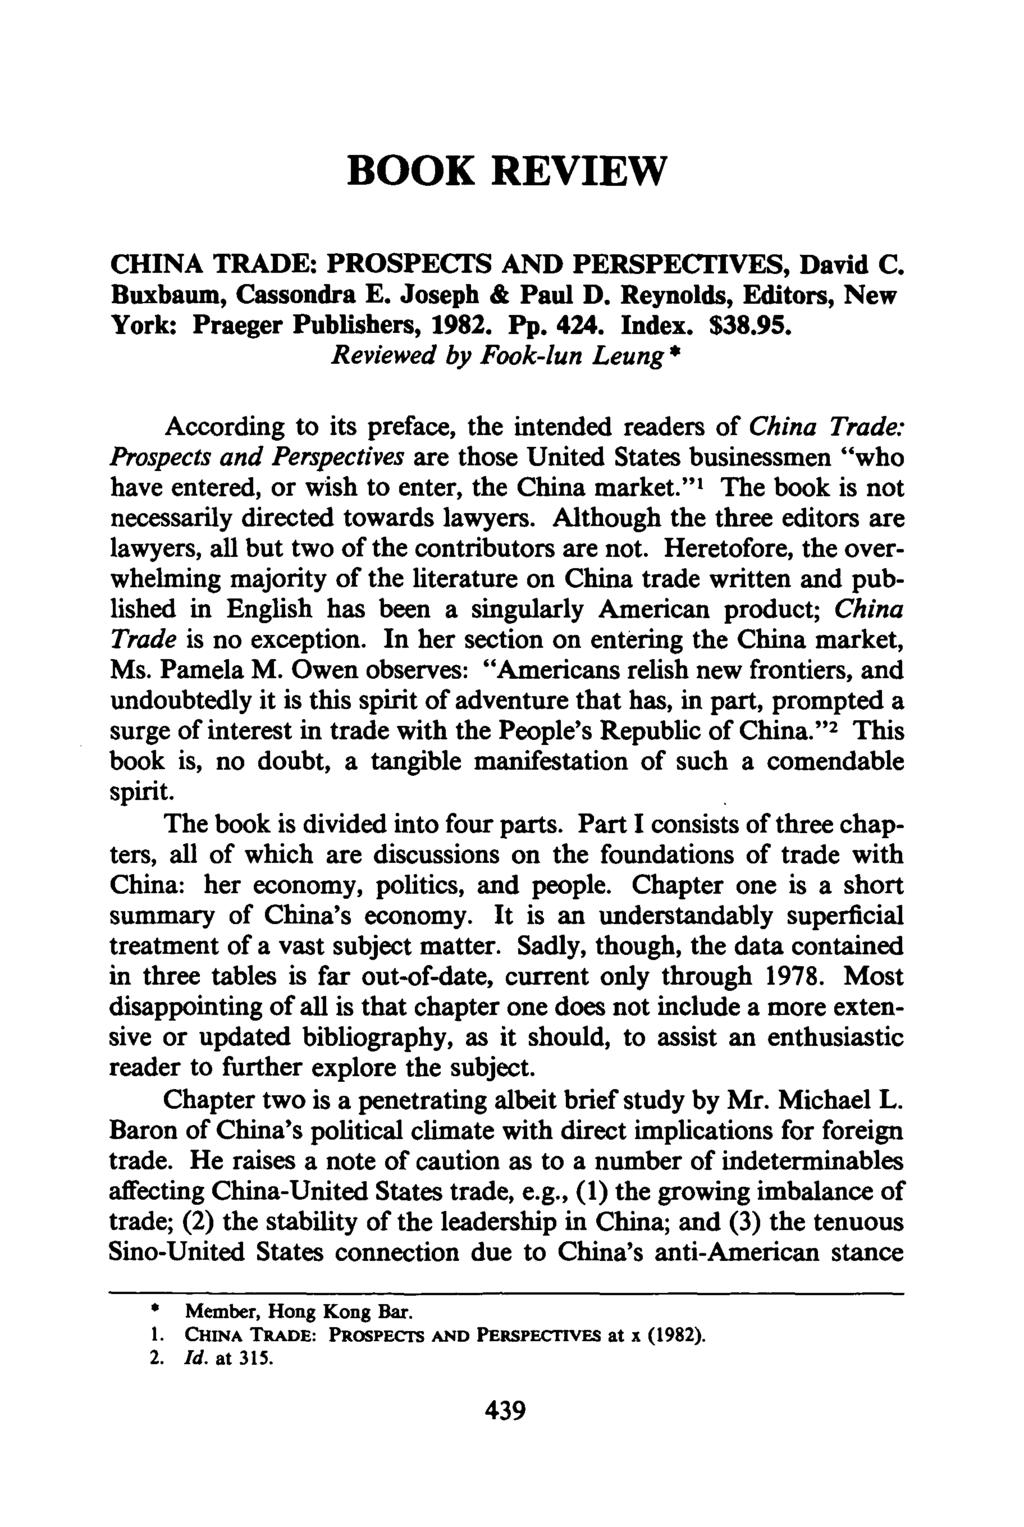 BOOK REVIEW CHINA TRADE: PROSPECTS AND PERSPECTIVES, David C. Buxbaum, Cassondra E. Joseph & Paul D. Reynolds, Editors, New York: Praeger Publishers, 1982. Pp. 424. Index. $38.95.